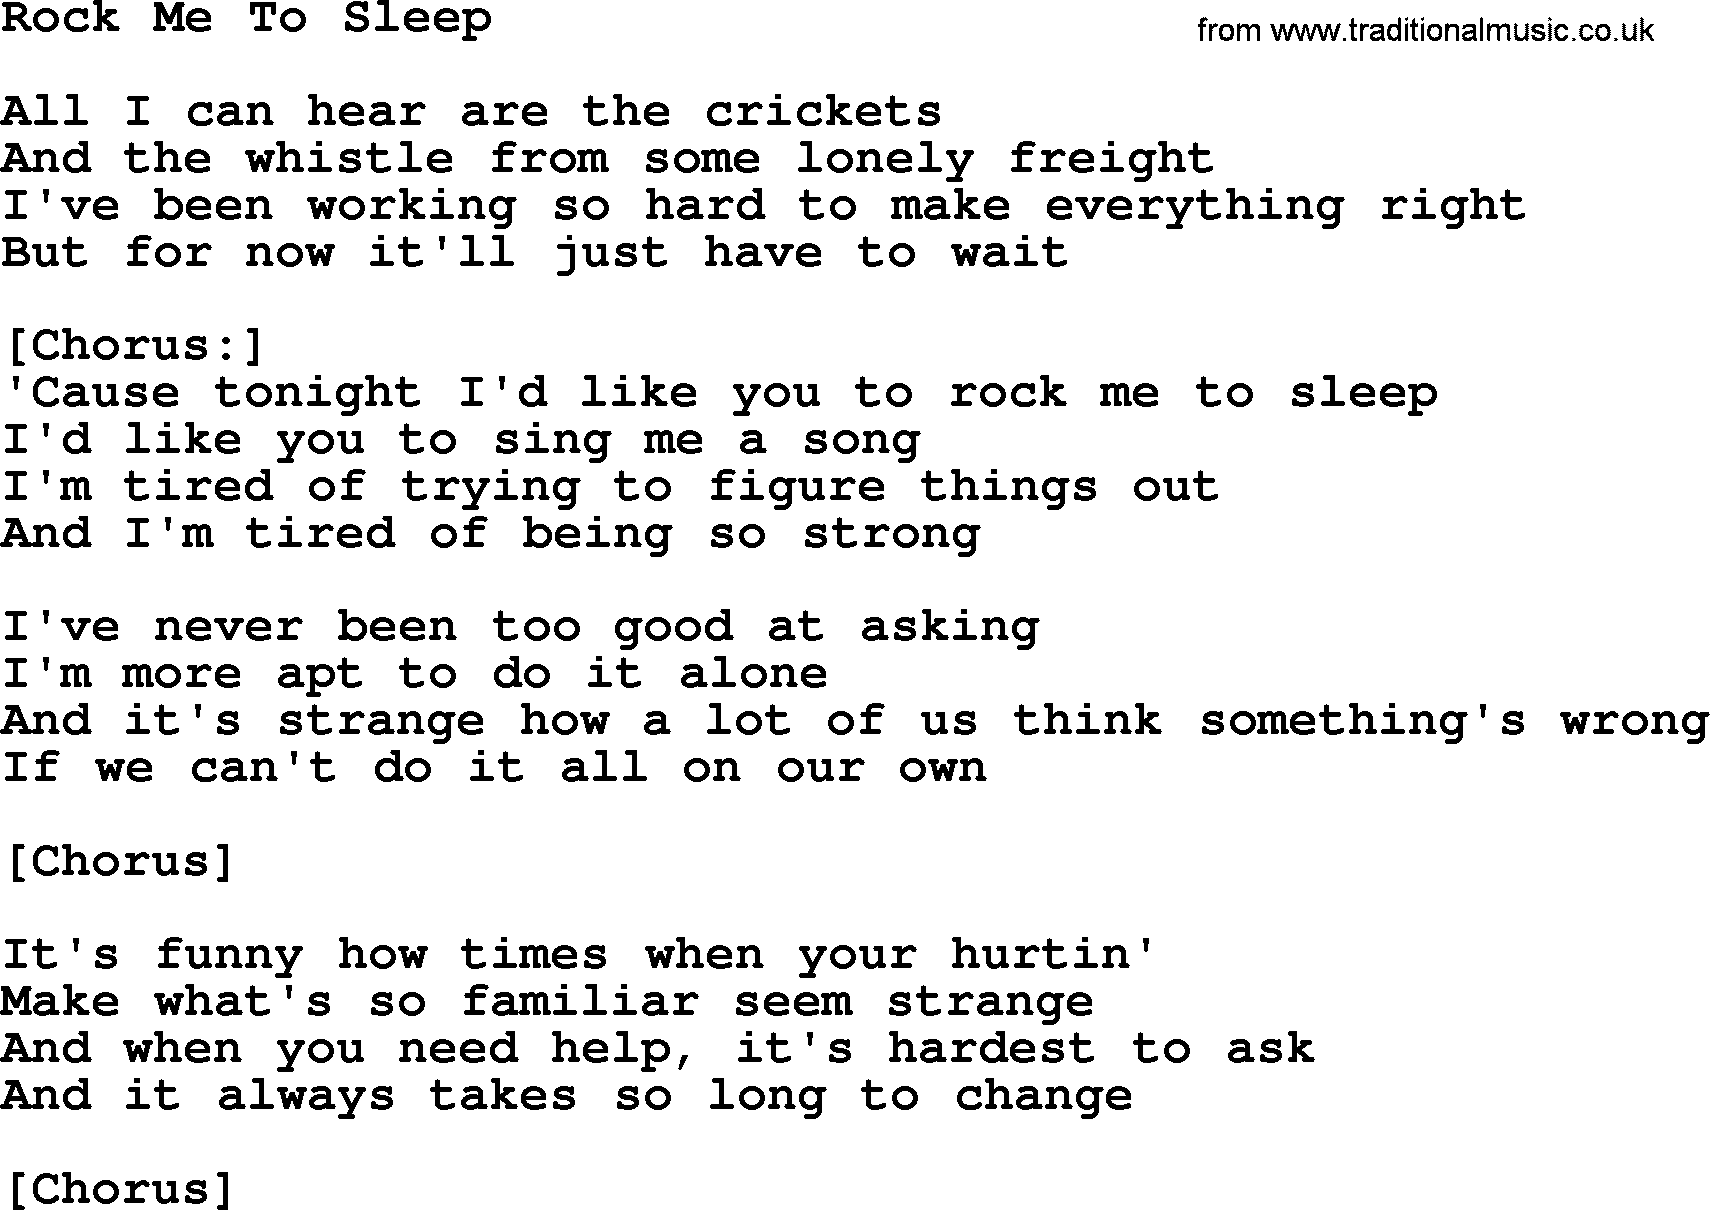 Willie Nelson song: Rock Me To Sleep lyrics